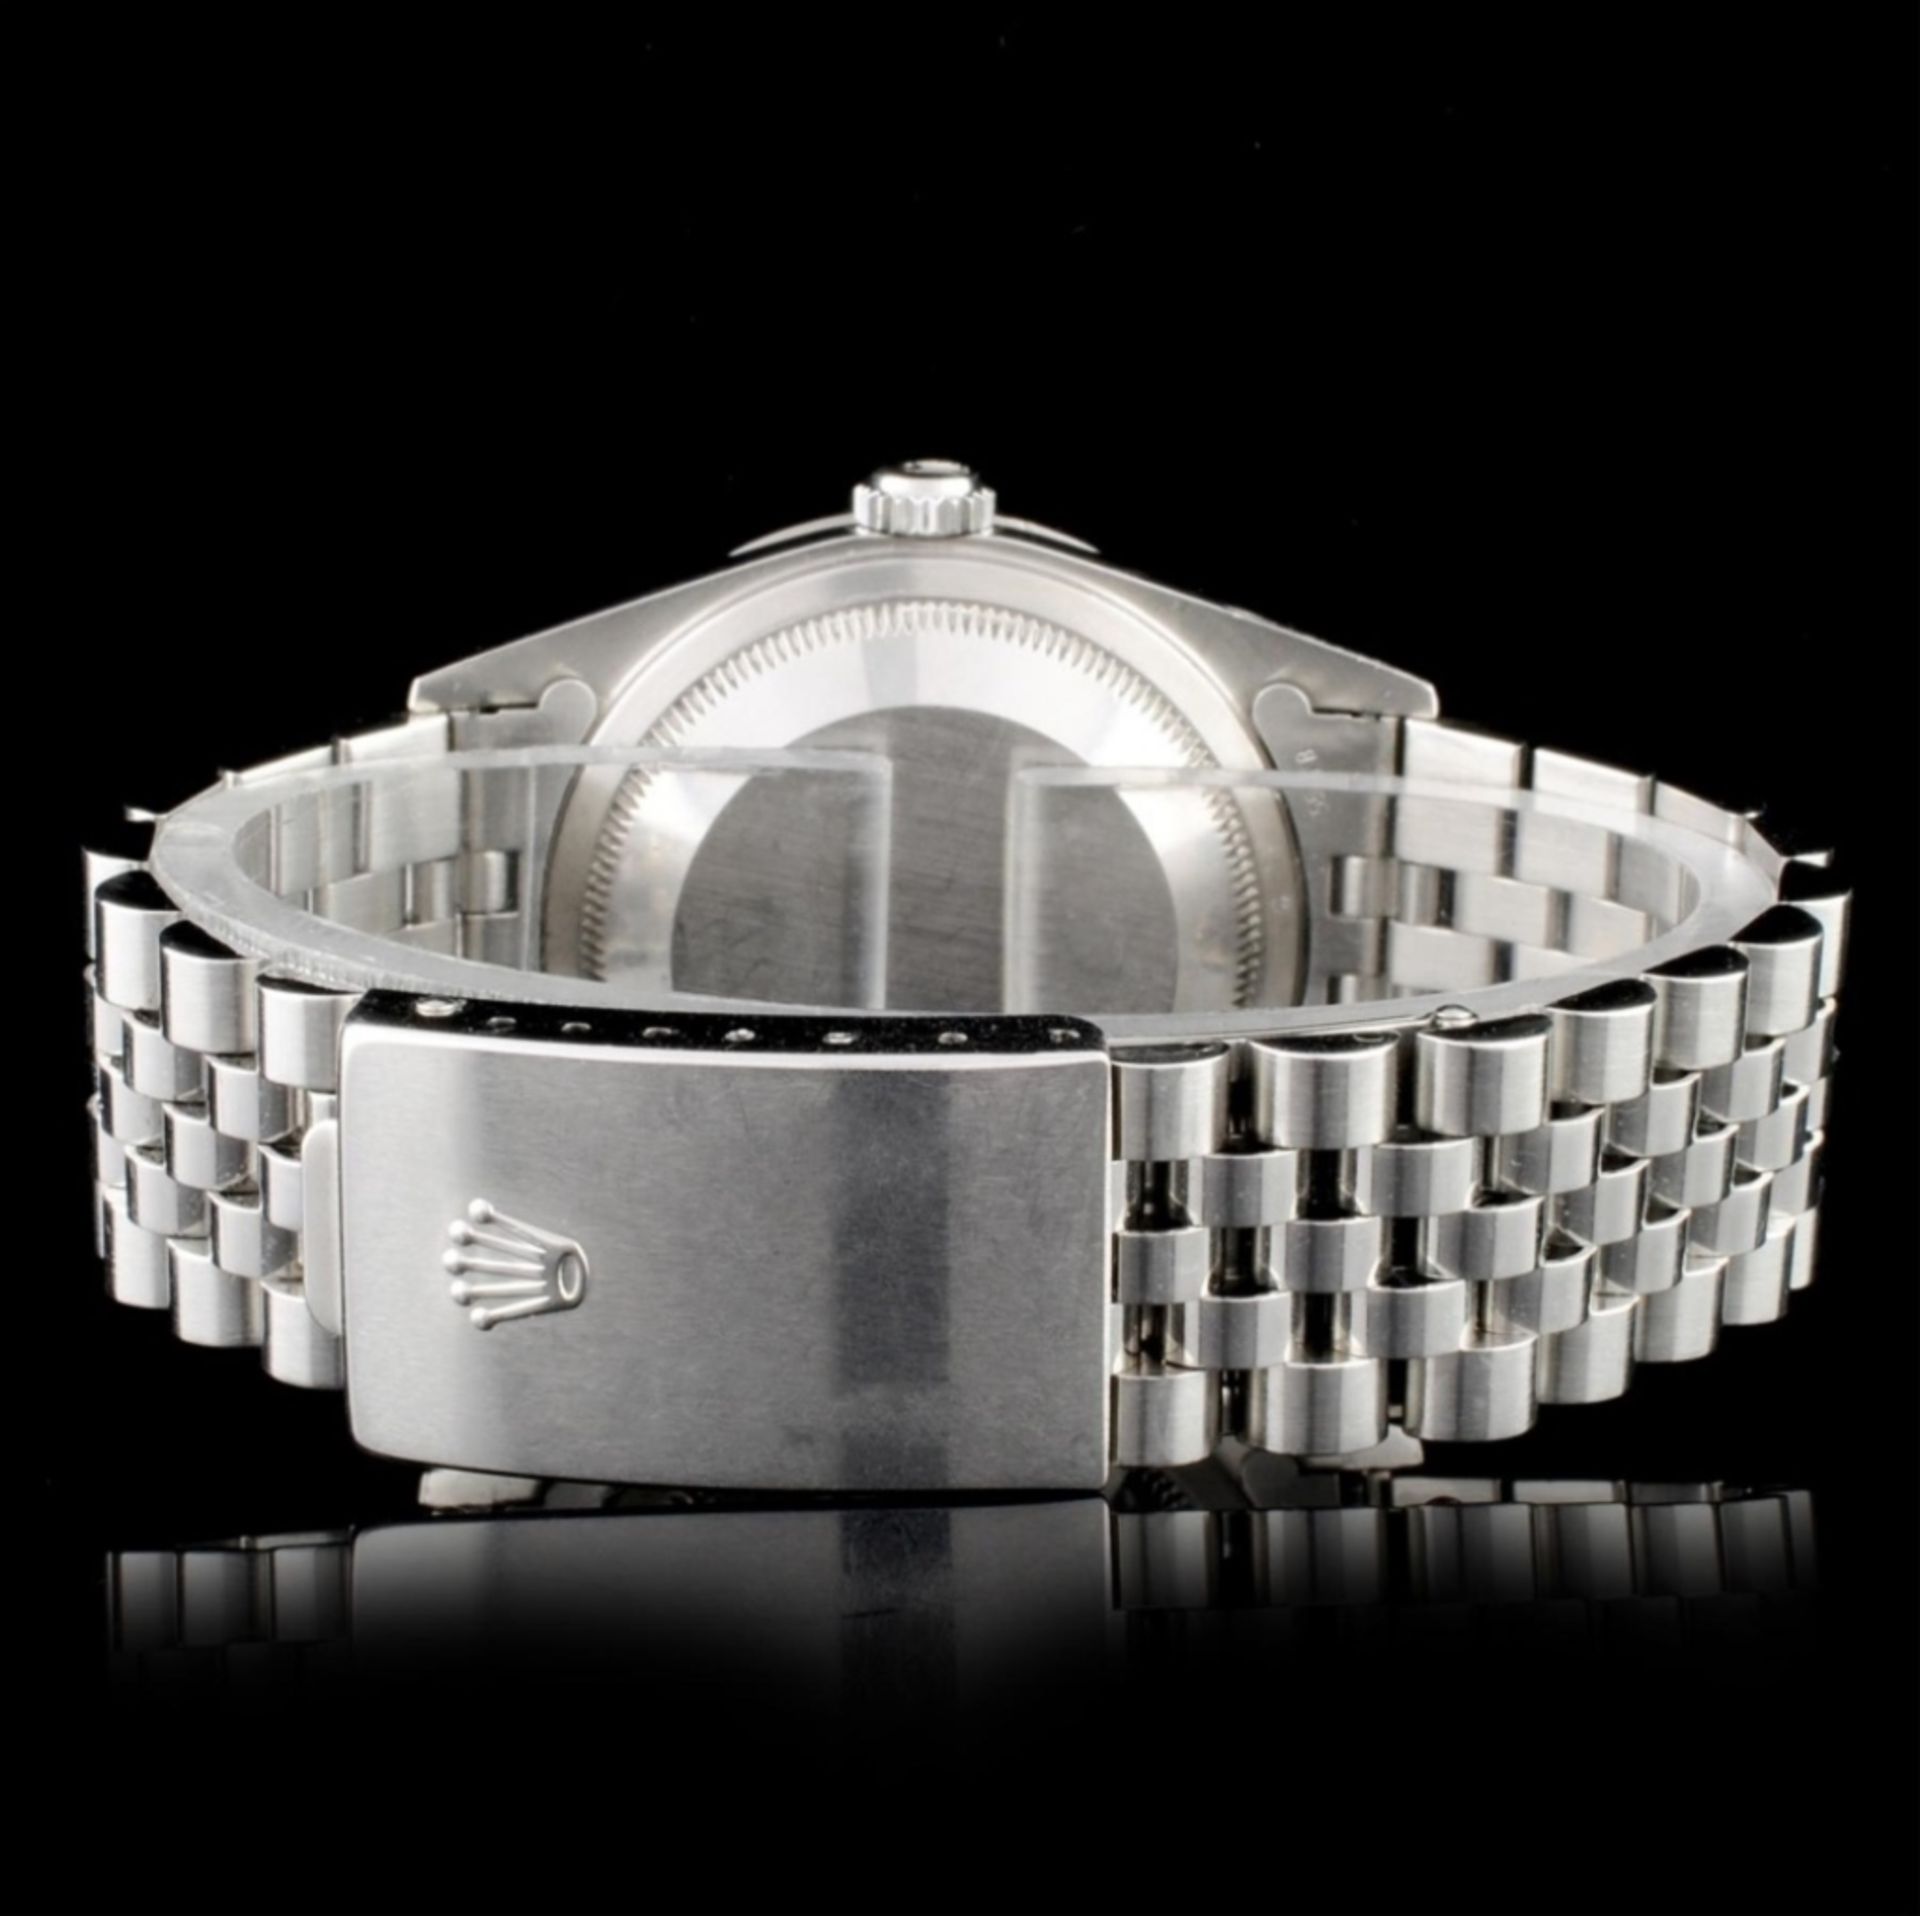 Rolex SS DateJust Diamond 36mm Watch - Image 3 of 4